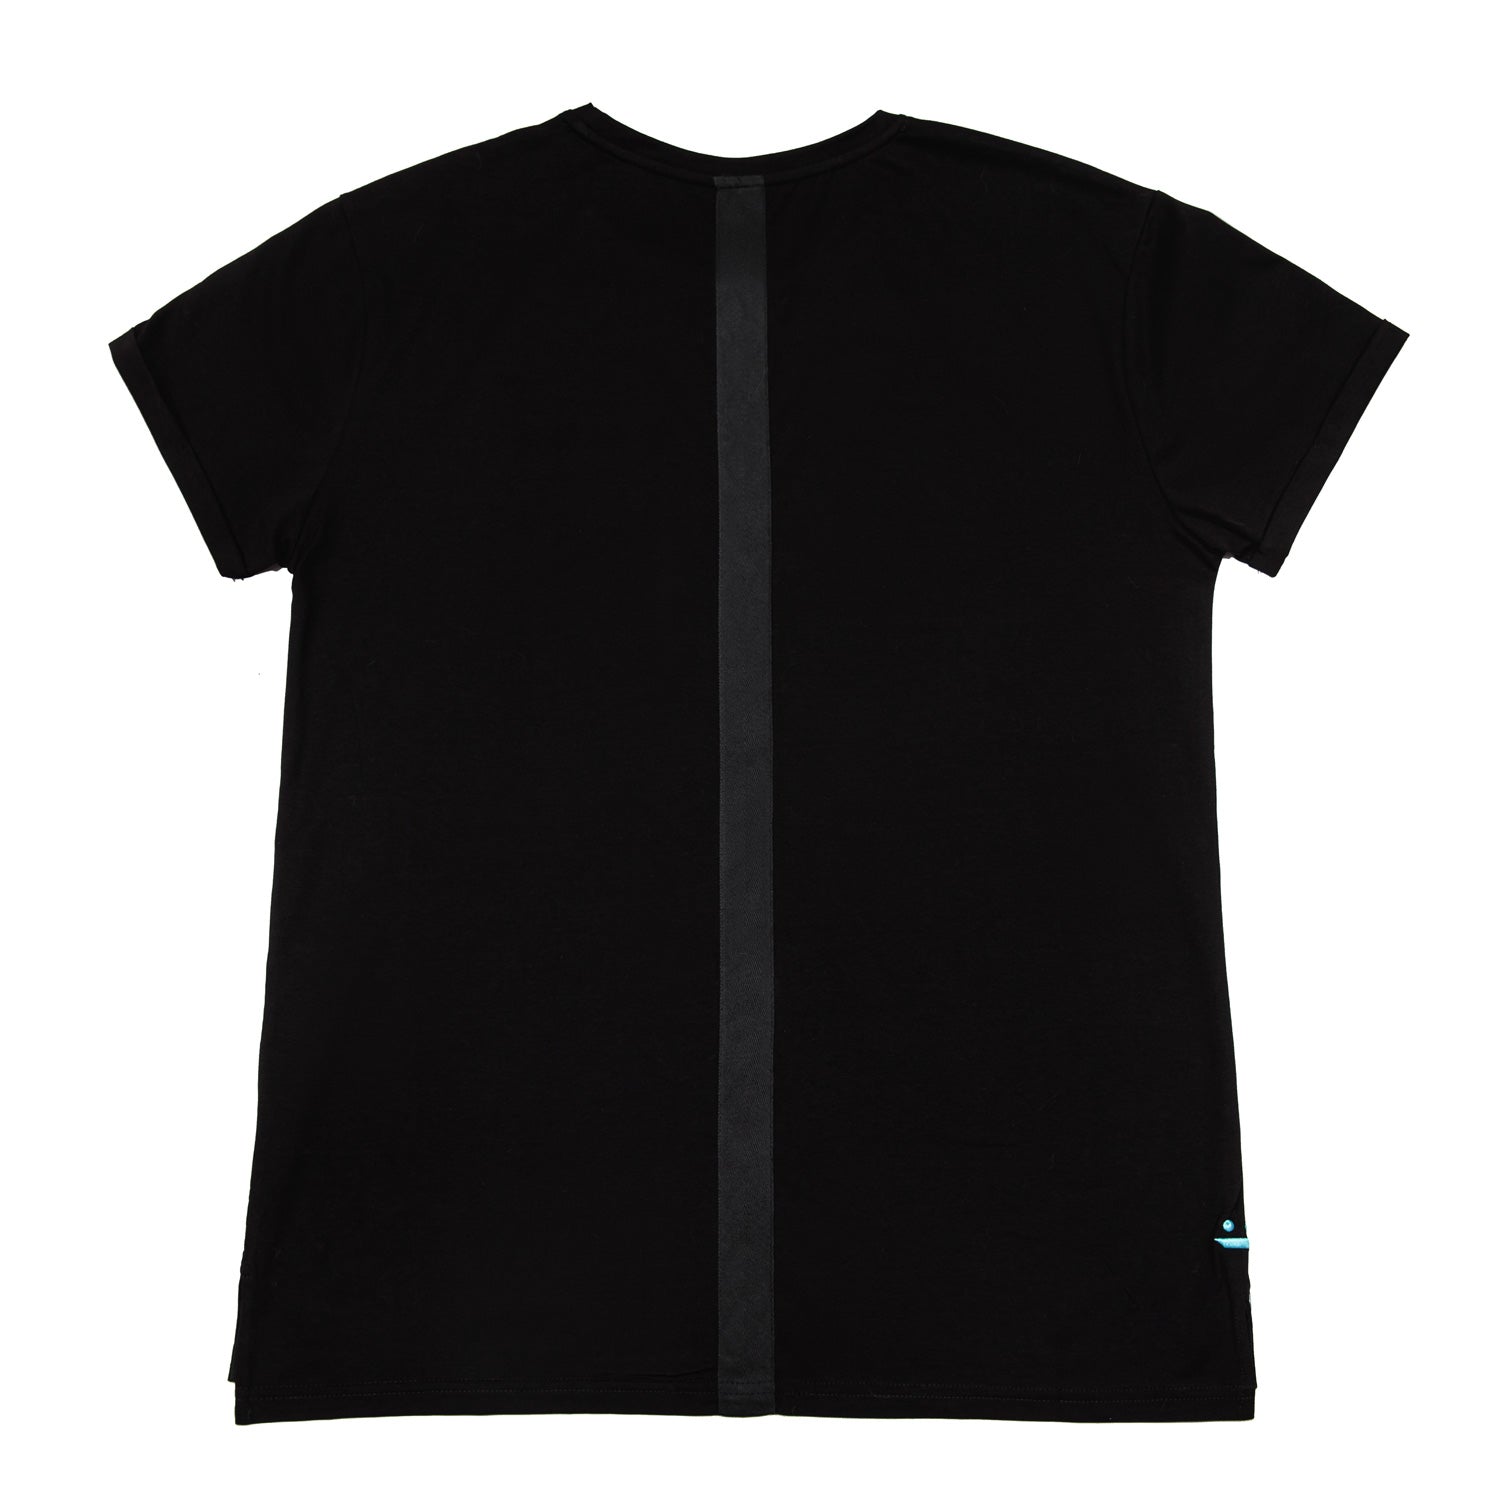 Deep black, T-shirt, shirt, man, plane tee, soft cotton, sleek, back view,